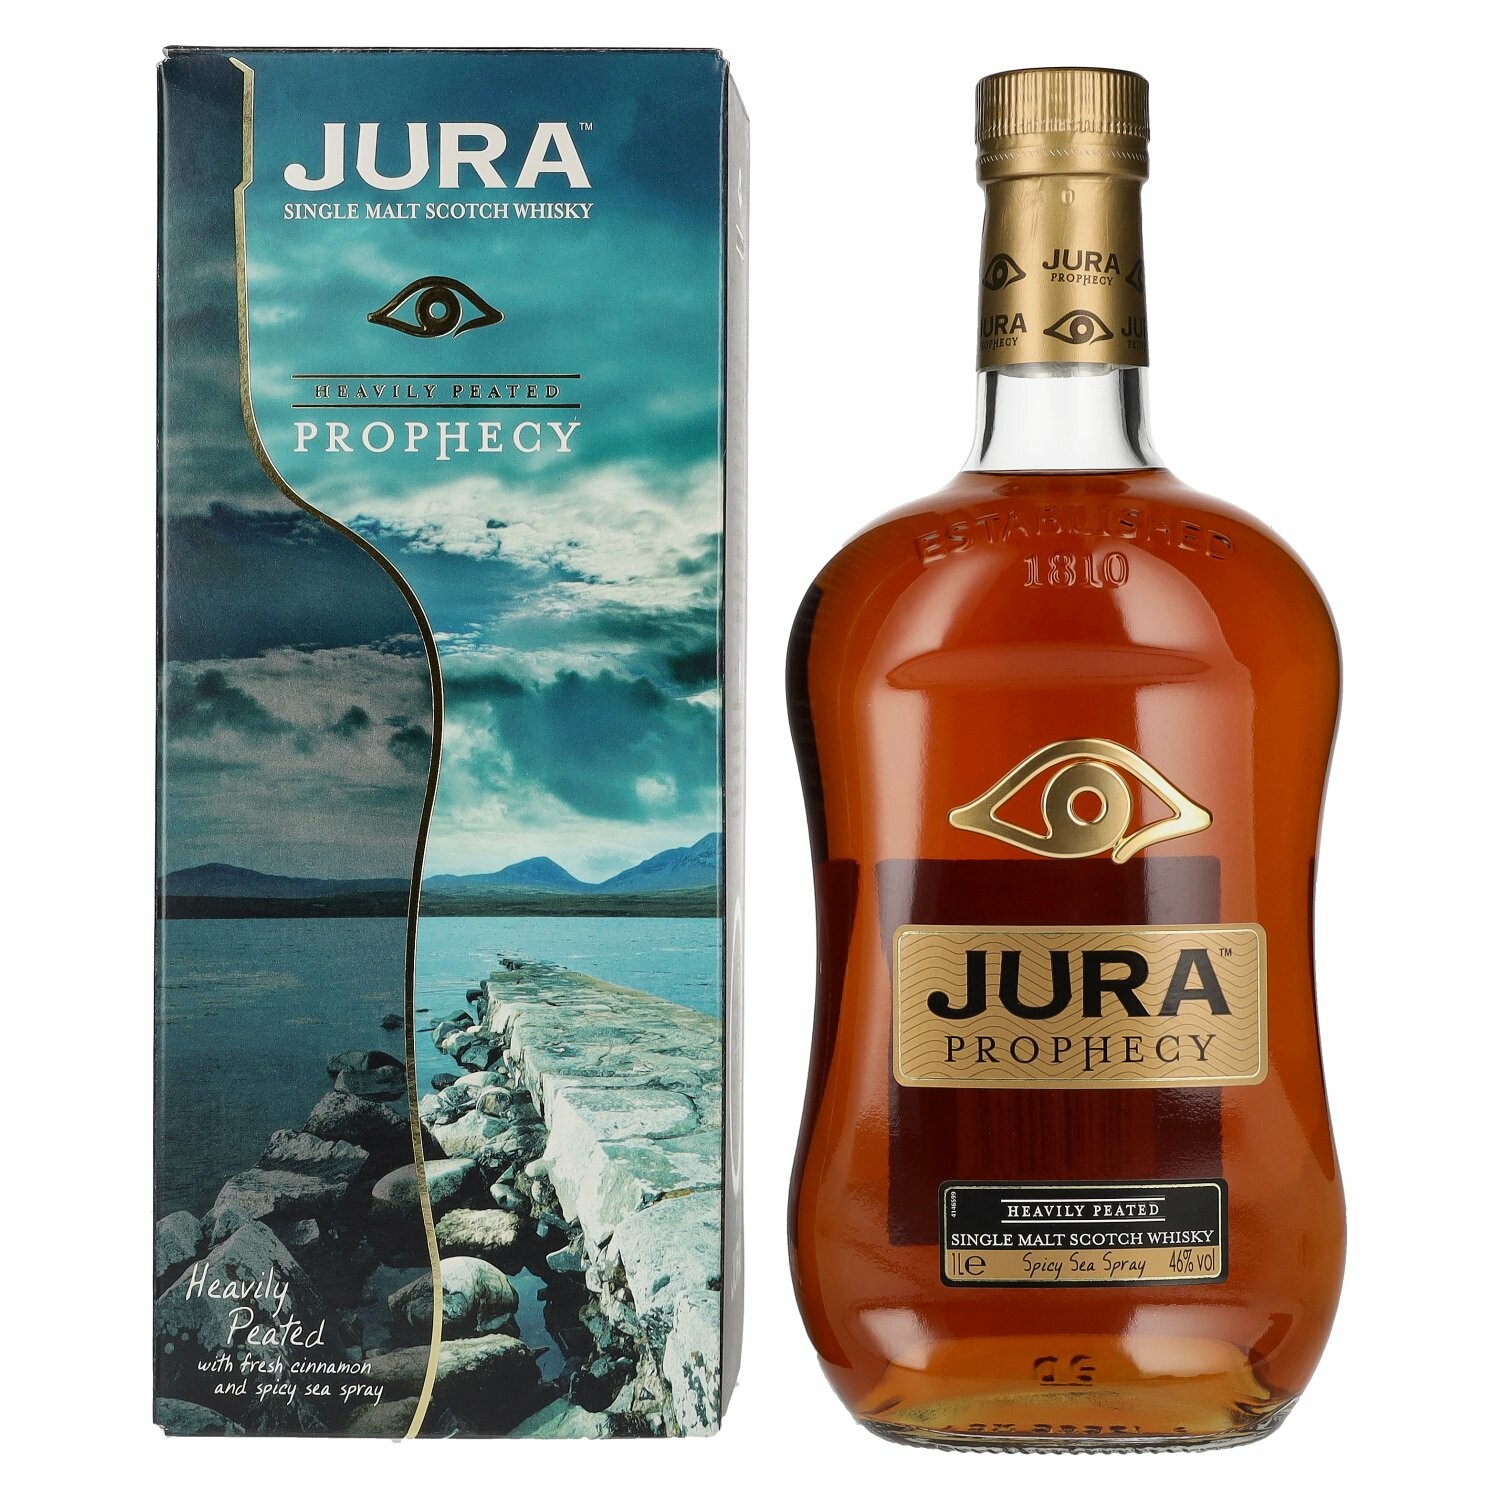 Jura PROPHECY Single Malt Scotch Whisky 46% Vol. 1l in Giftbox